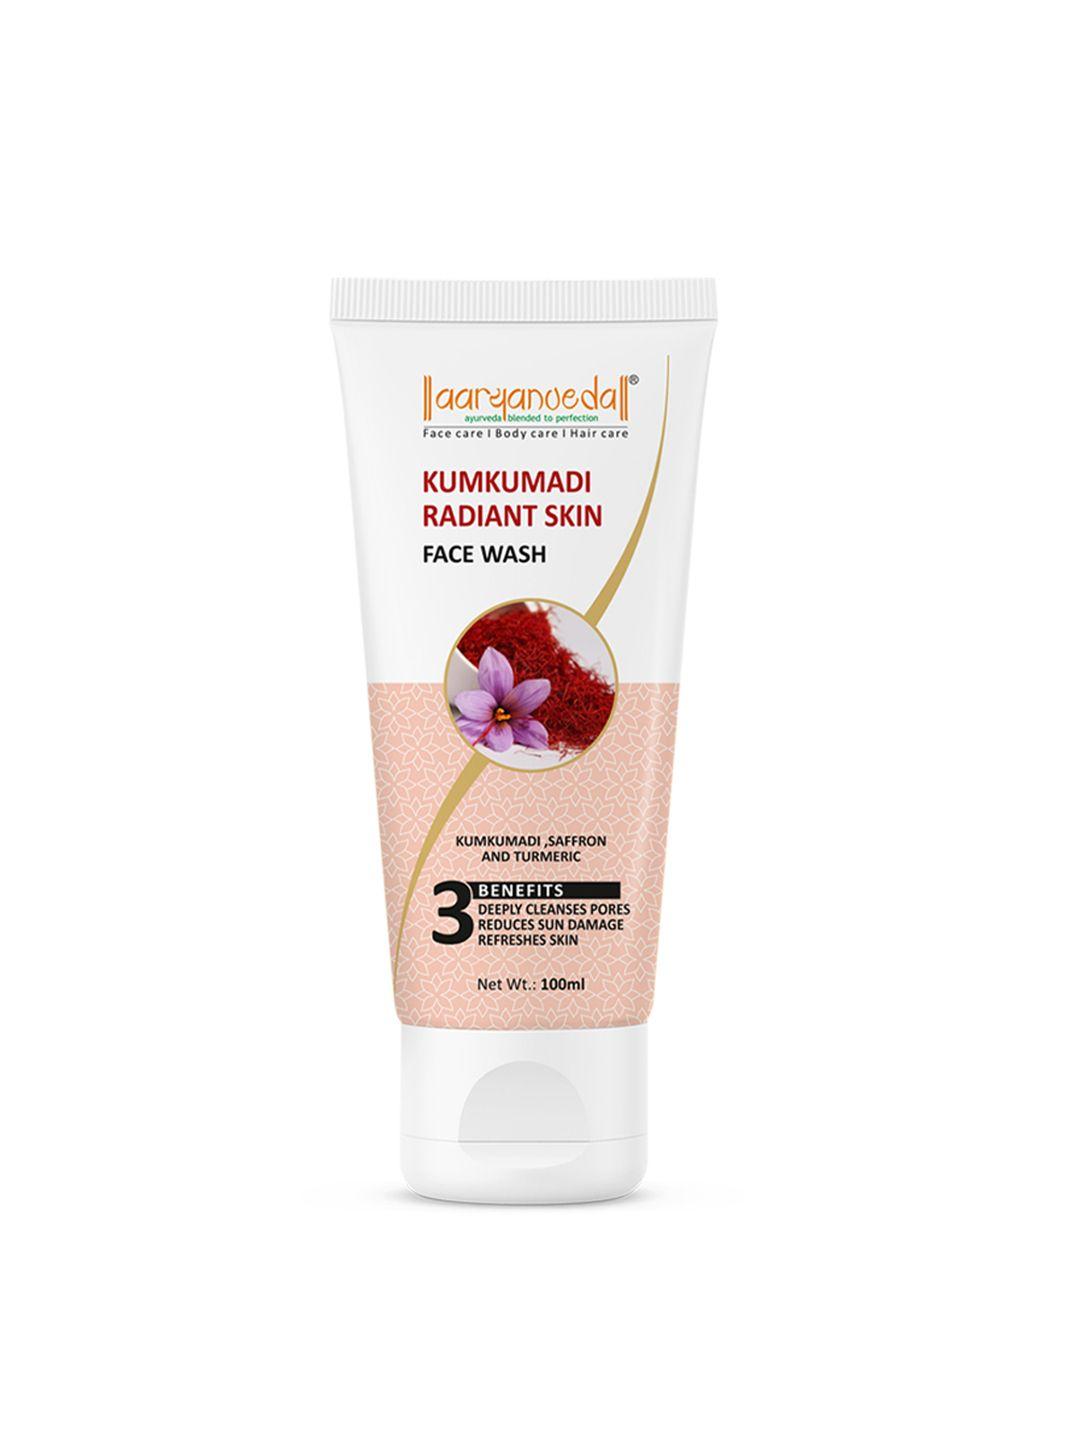 aryanveda kumkumadi radiant skin face wash with saffron & turmeric for reduces sun damage, 100ml